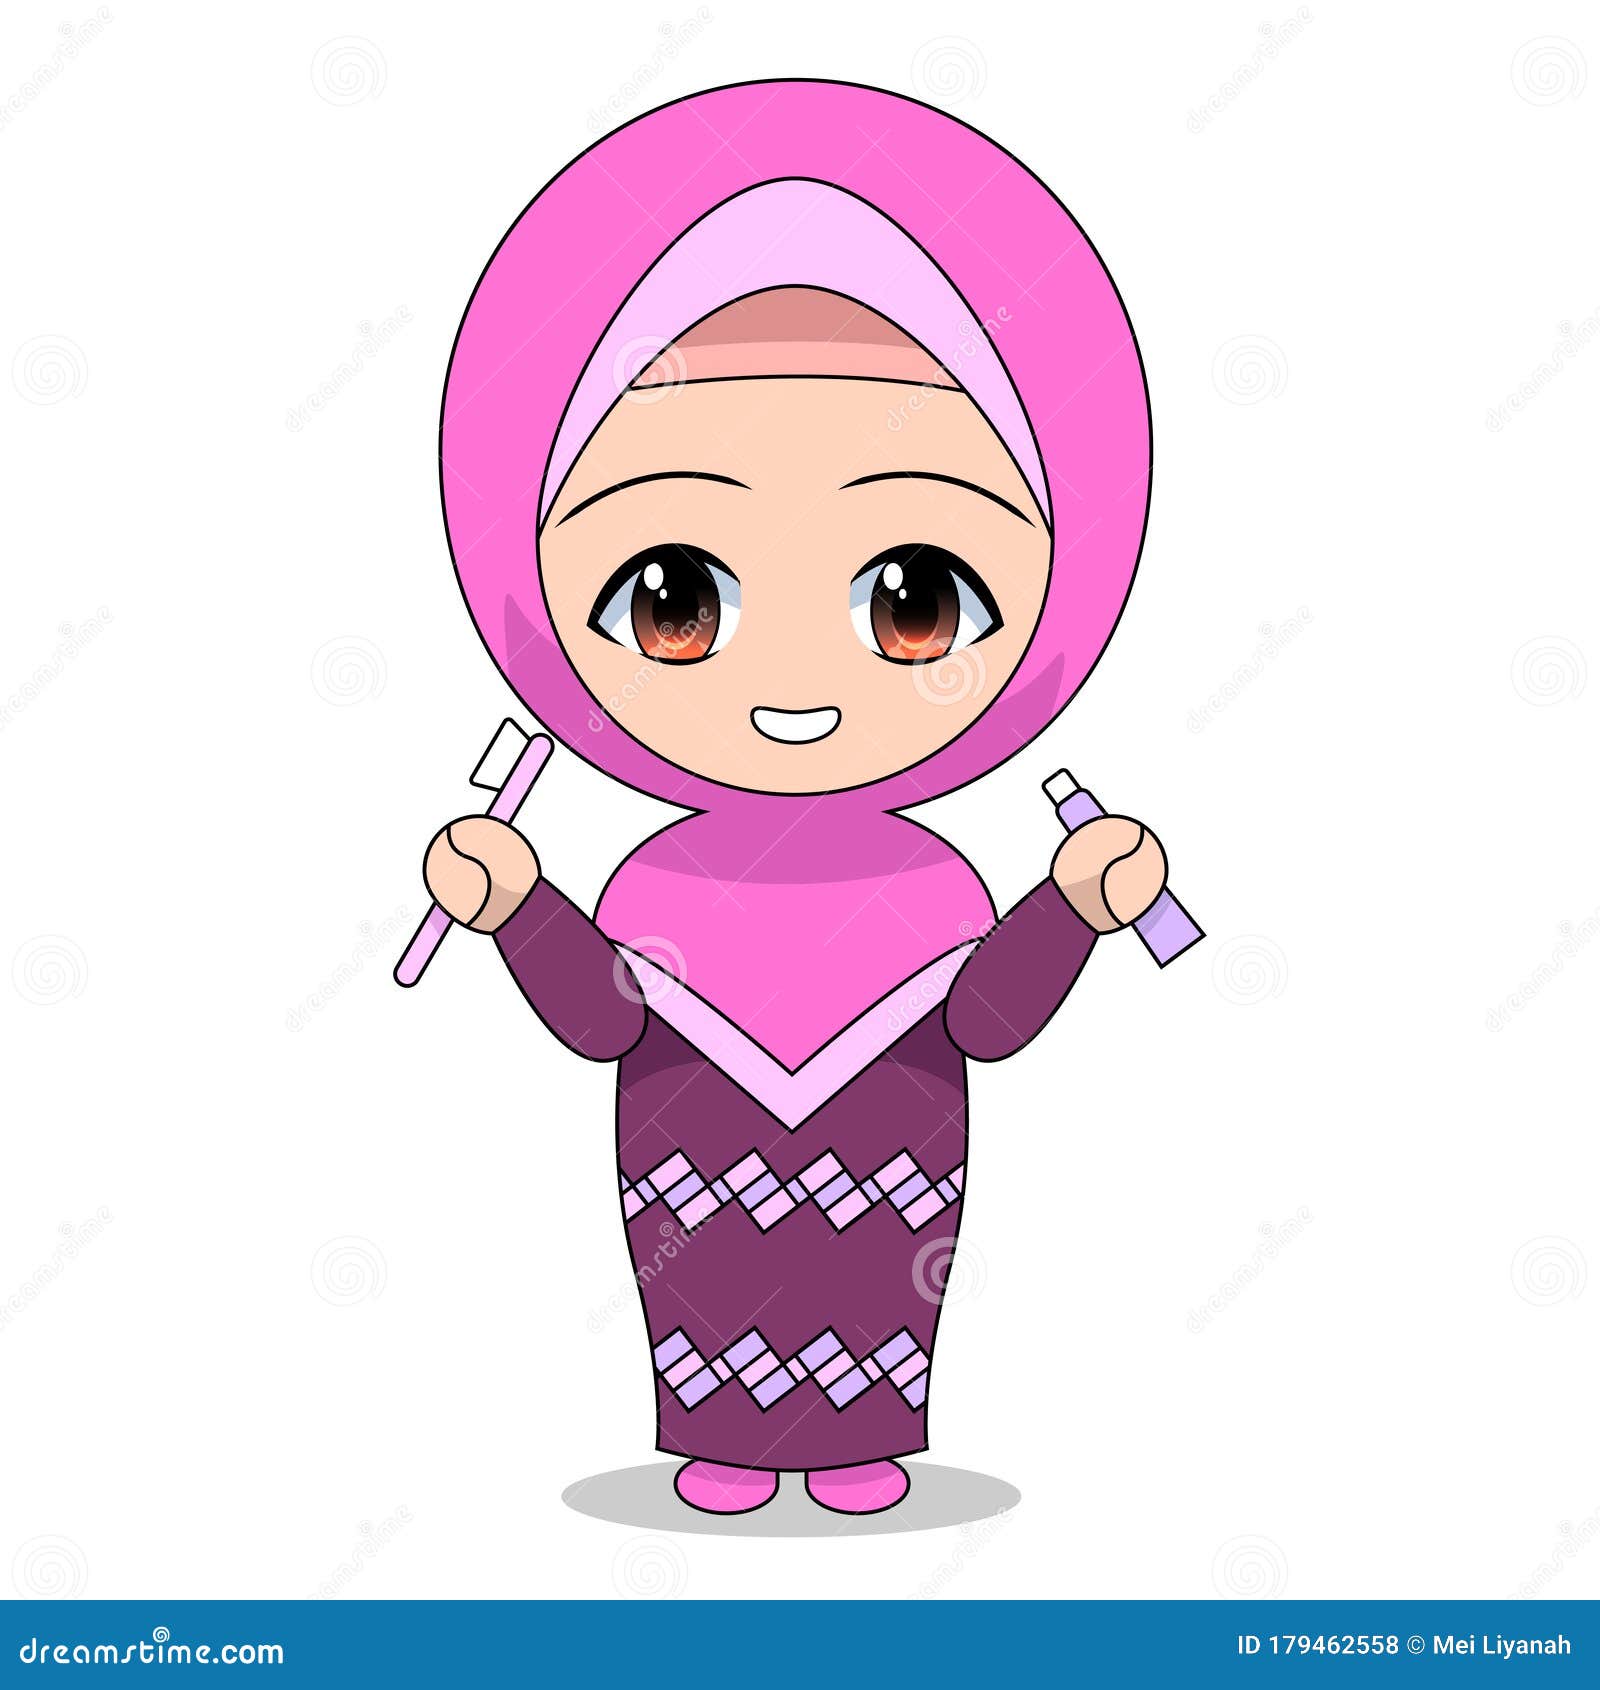 Muslim Cartoons